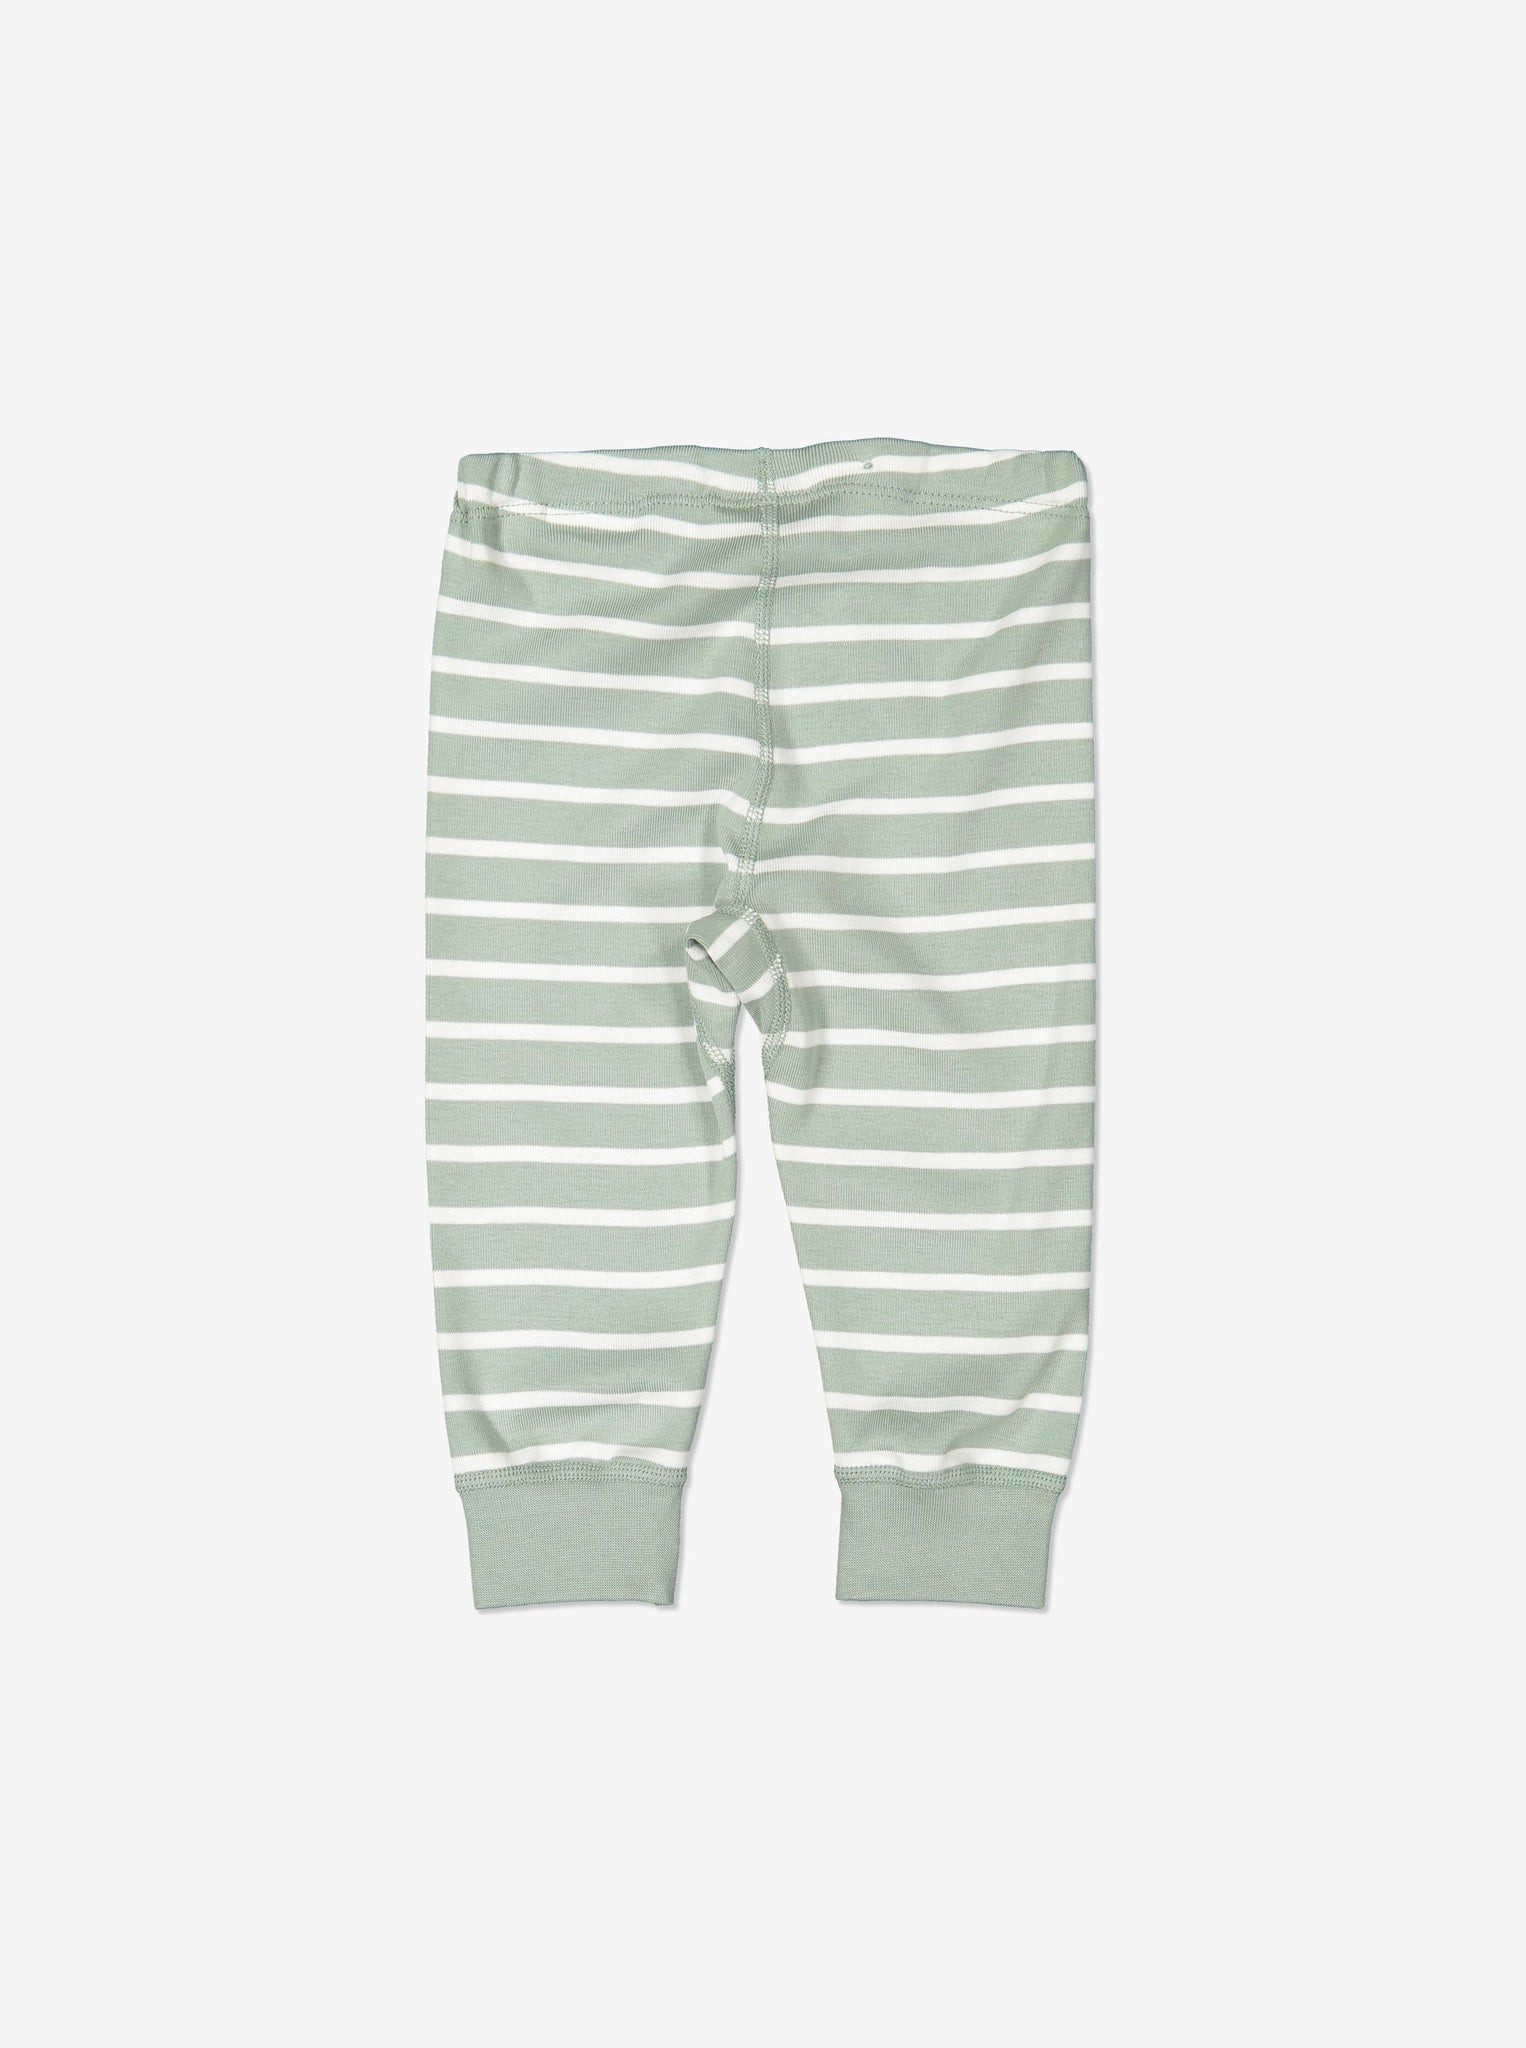 Striped Baby GOTS Organic Green Leggings